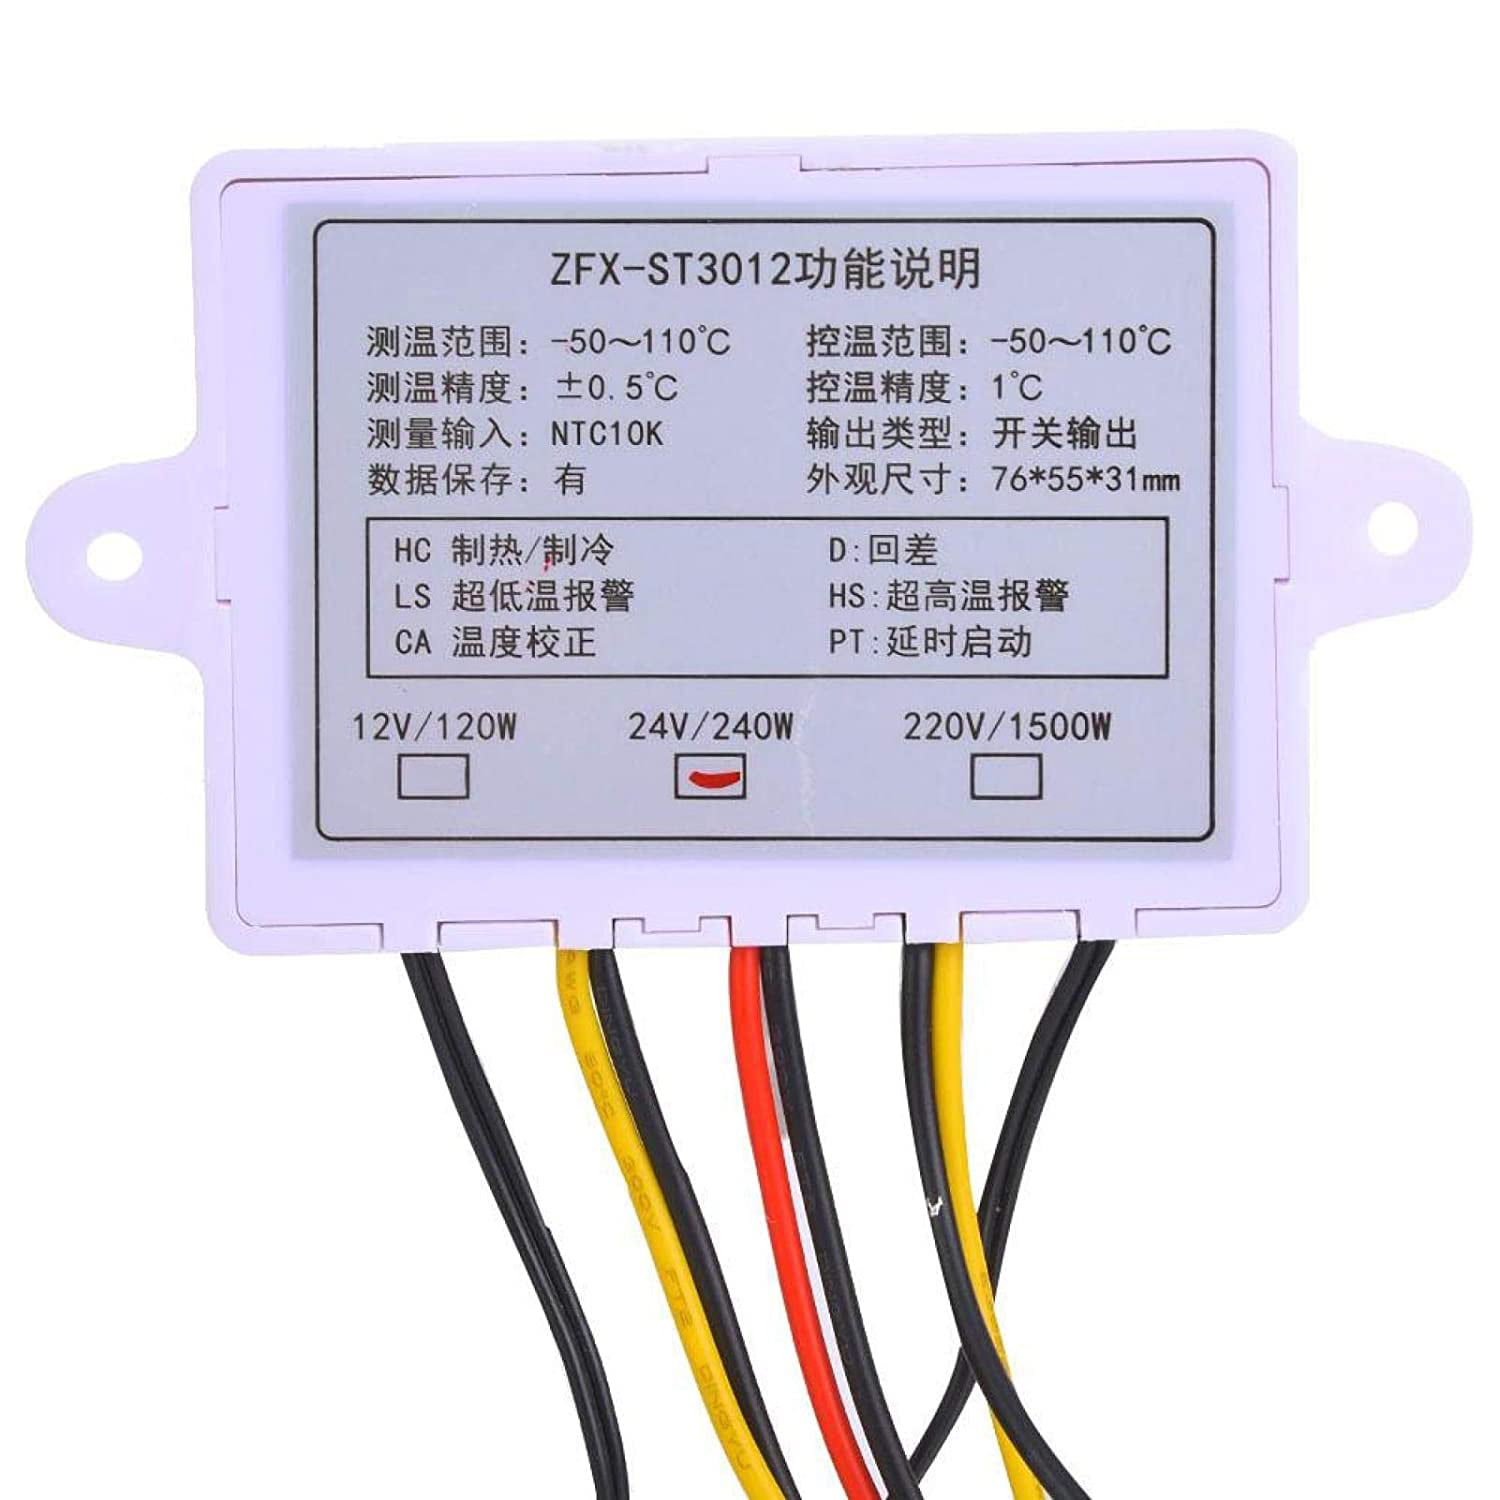 DC24V ABS ST3012 Temperature Controller Intelligent Digital Displayed Dual Channel Adjustable Temperature Control Switch Intelligent Thermostat